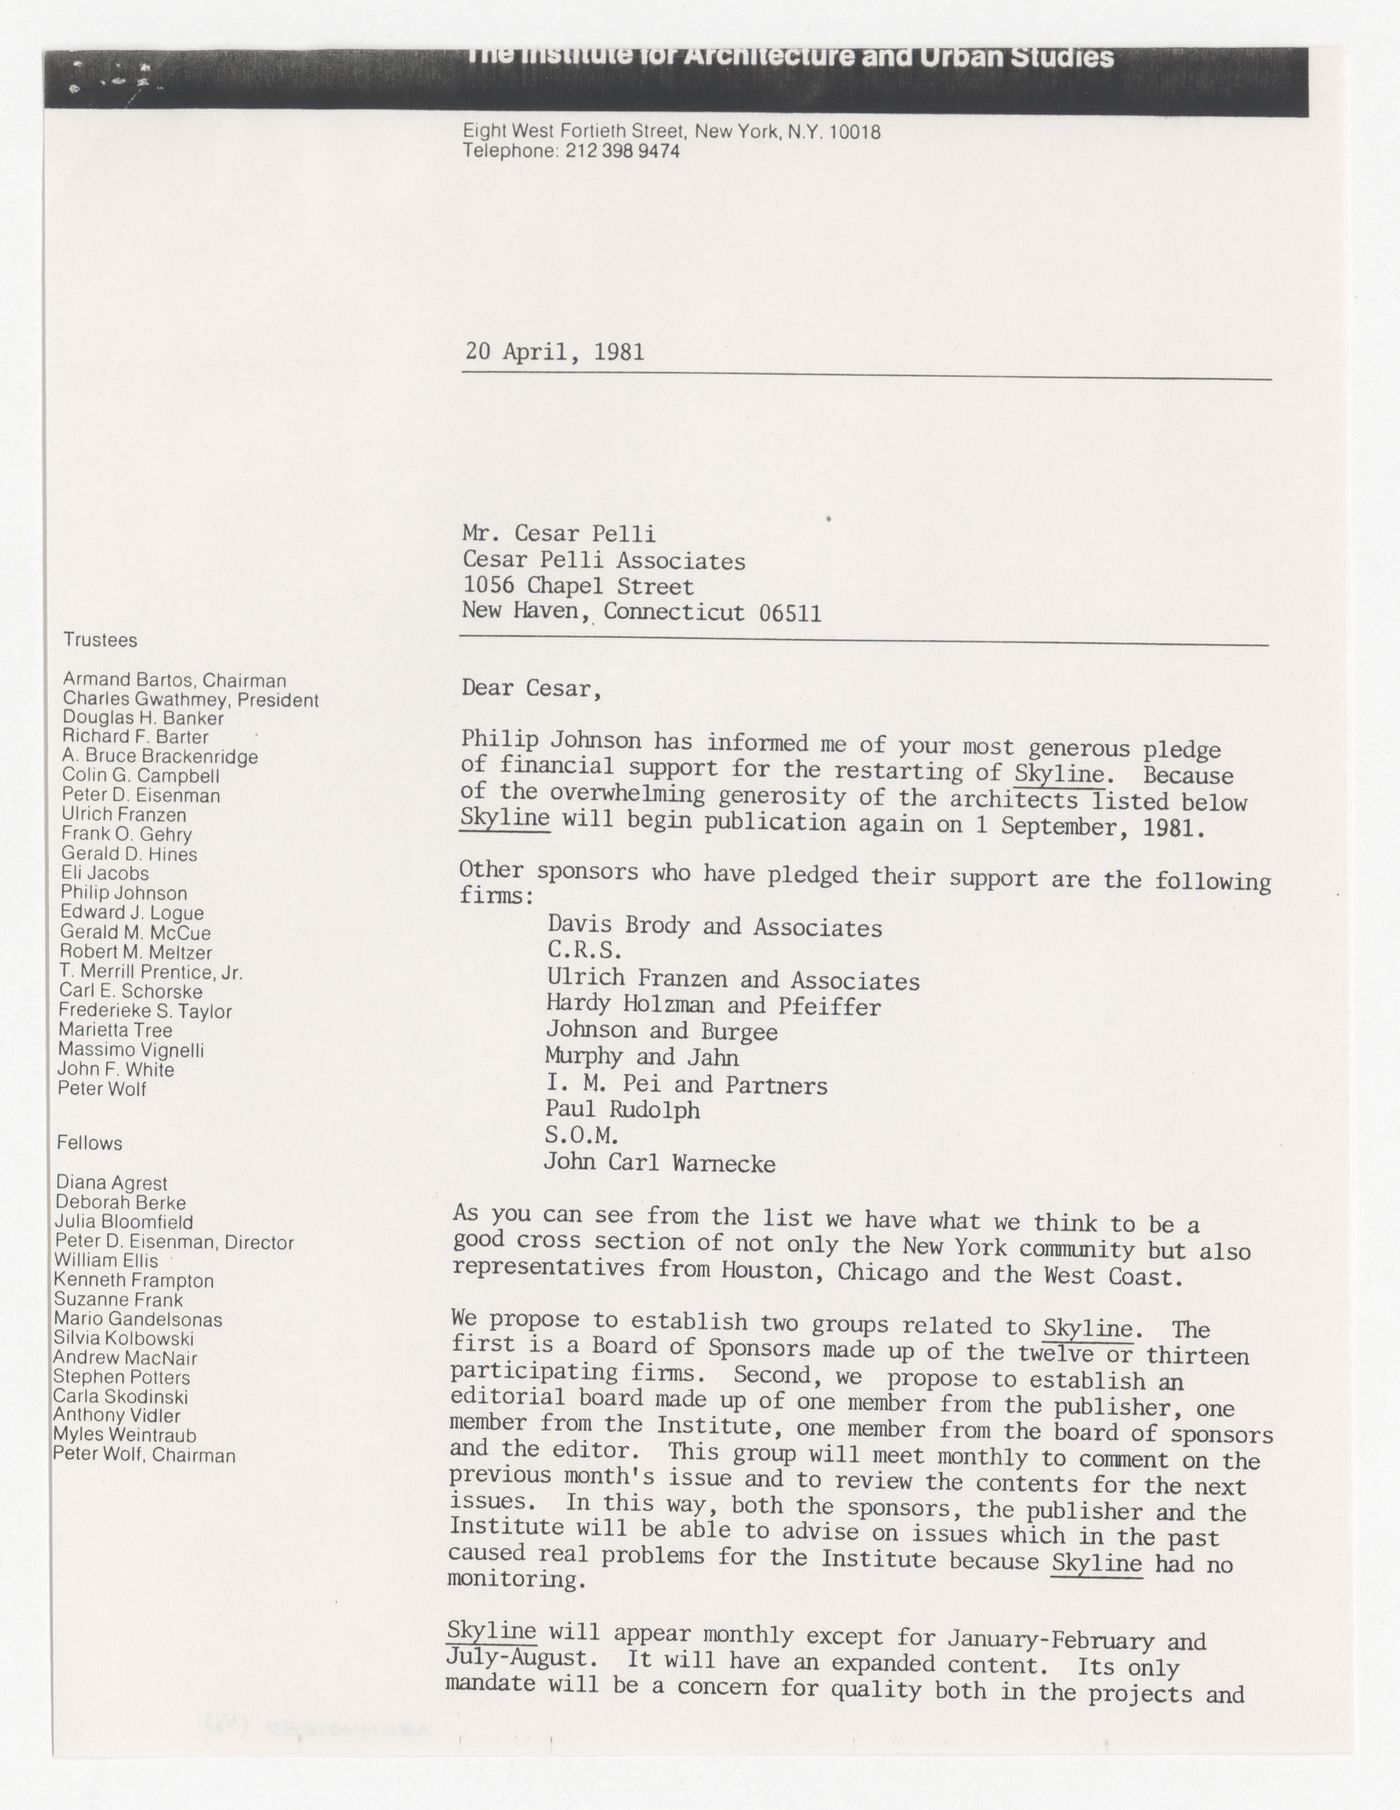 Letter from Peter D. Eisenman to Cesar Pelli about sponsorship for Skyline